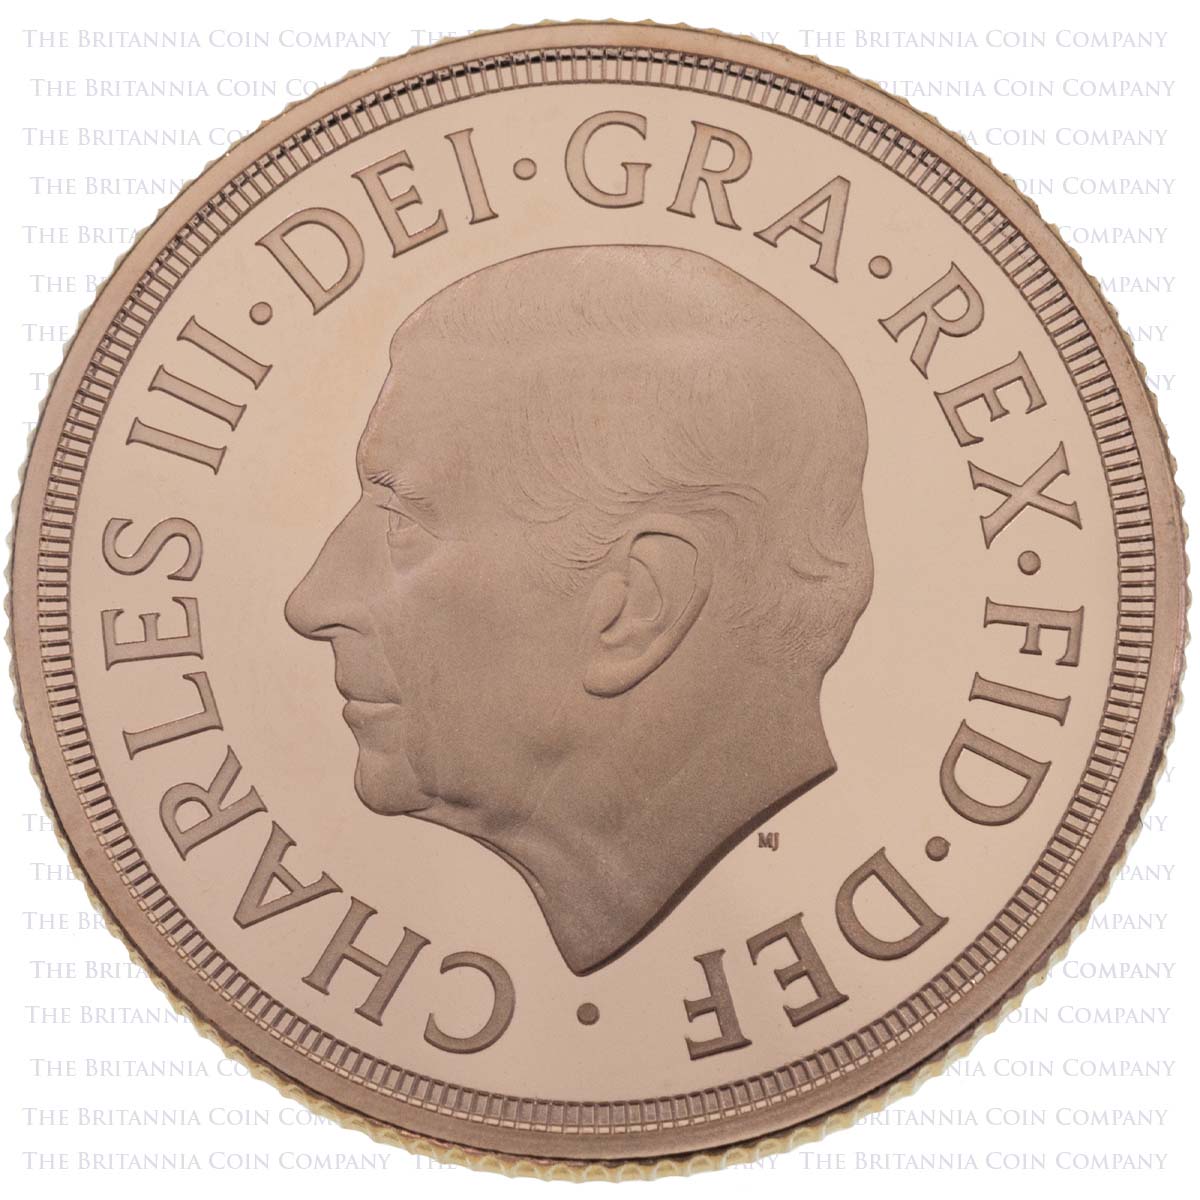 MSVH22 2022 Charles III Gold Proof Half Sovereign Queen Elizabeth II Memorial Coin Obverse